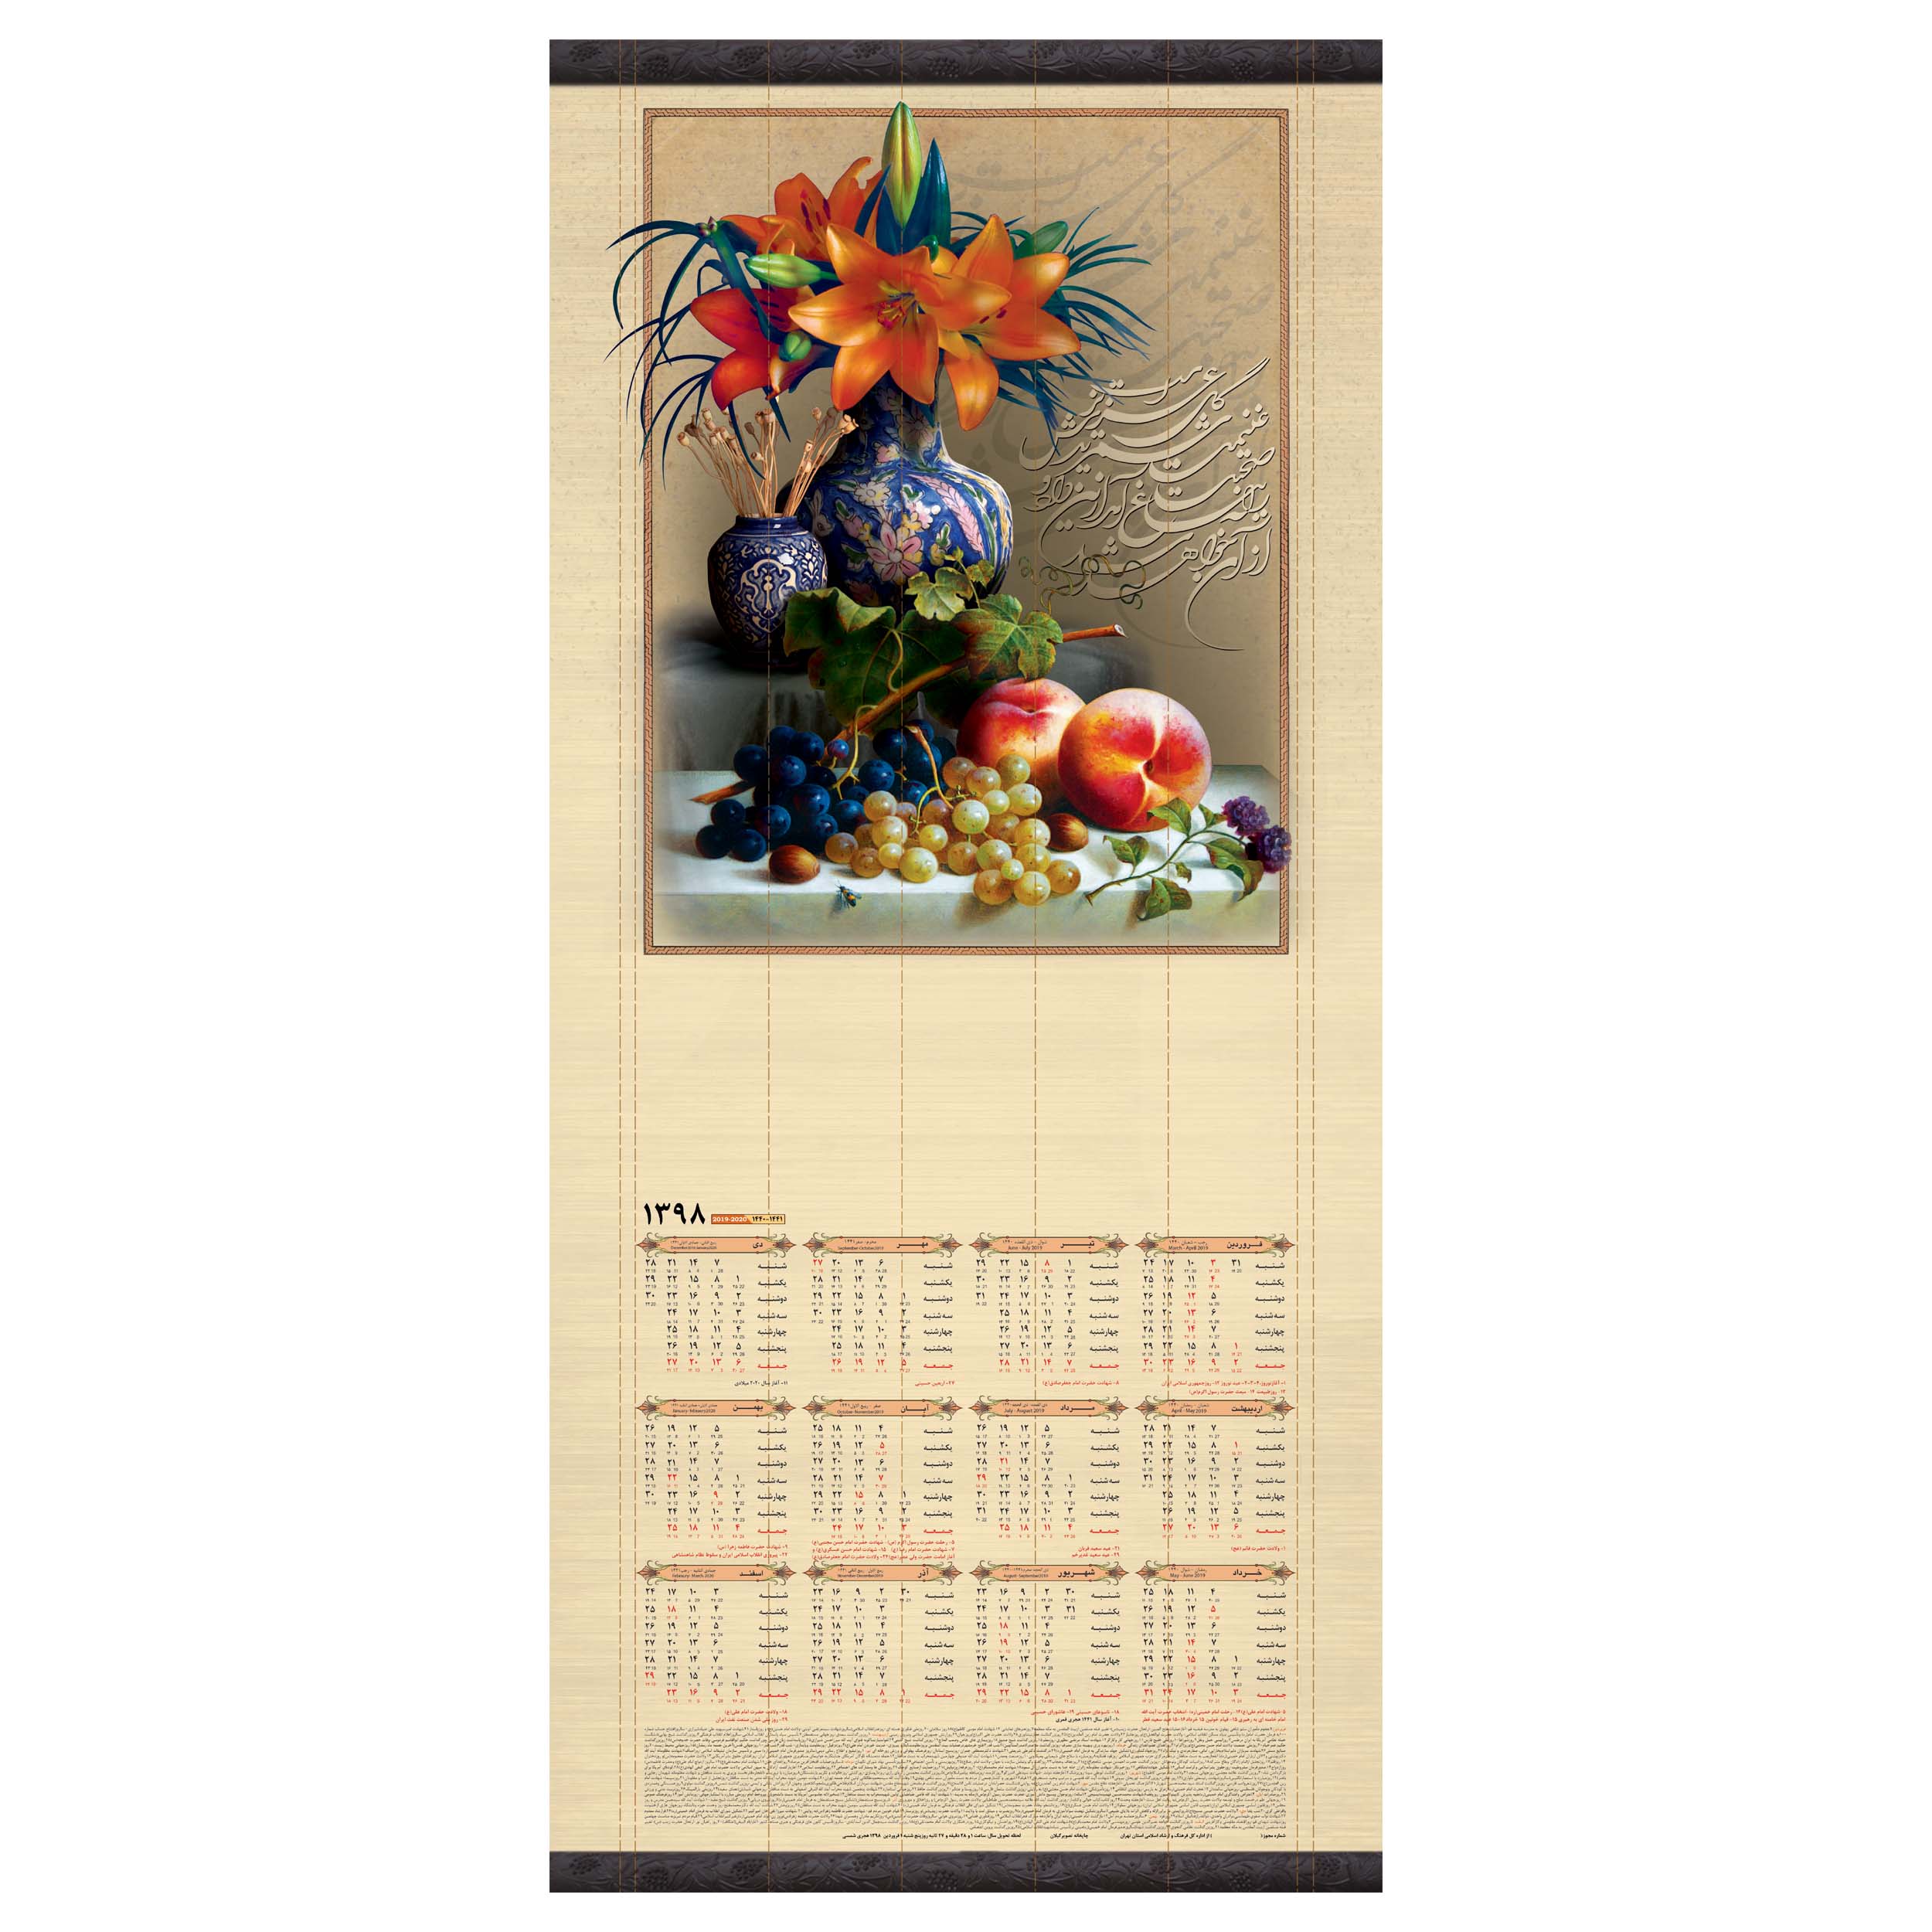 تقویم دیواری 1398 طرح گل و میوه بسته 30 عددی